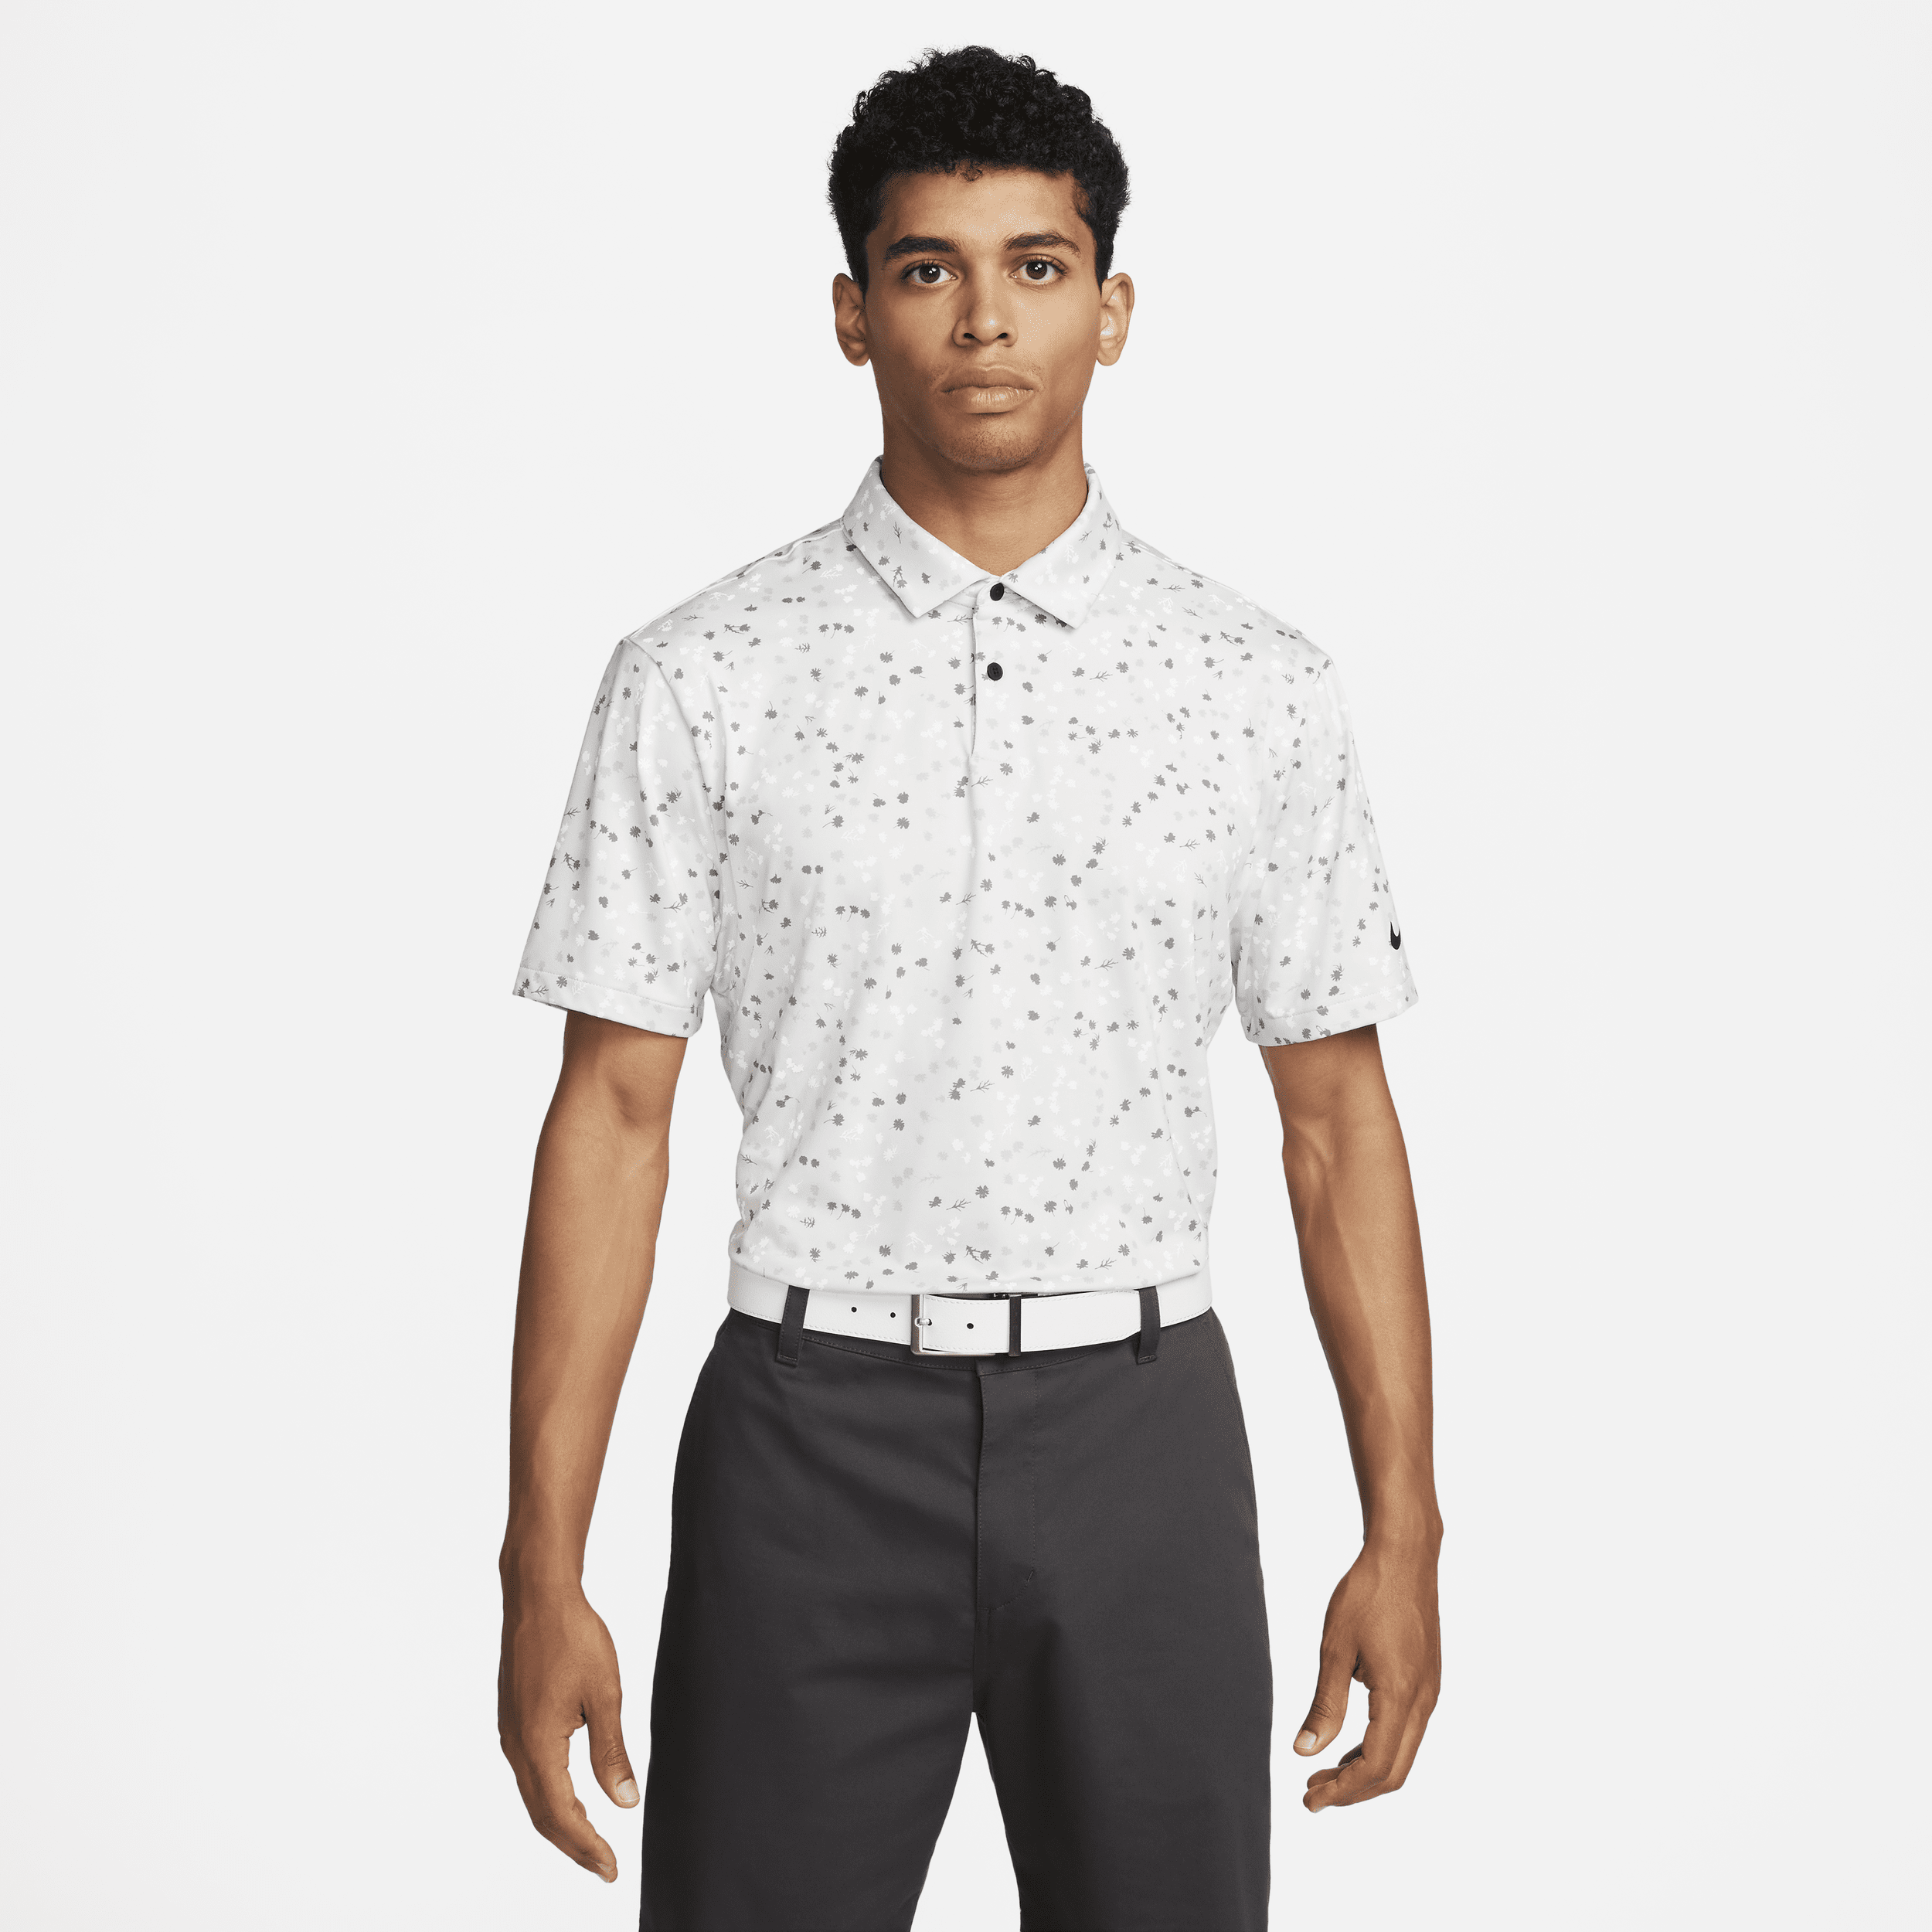 Nike Men's Dri-fit Tour Golf Polo In Grey